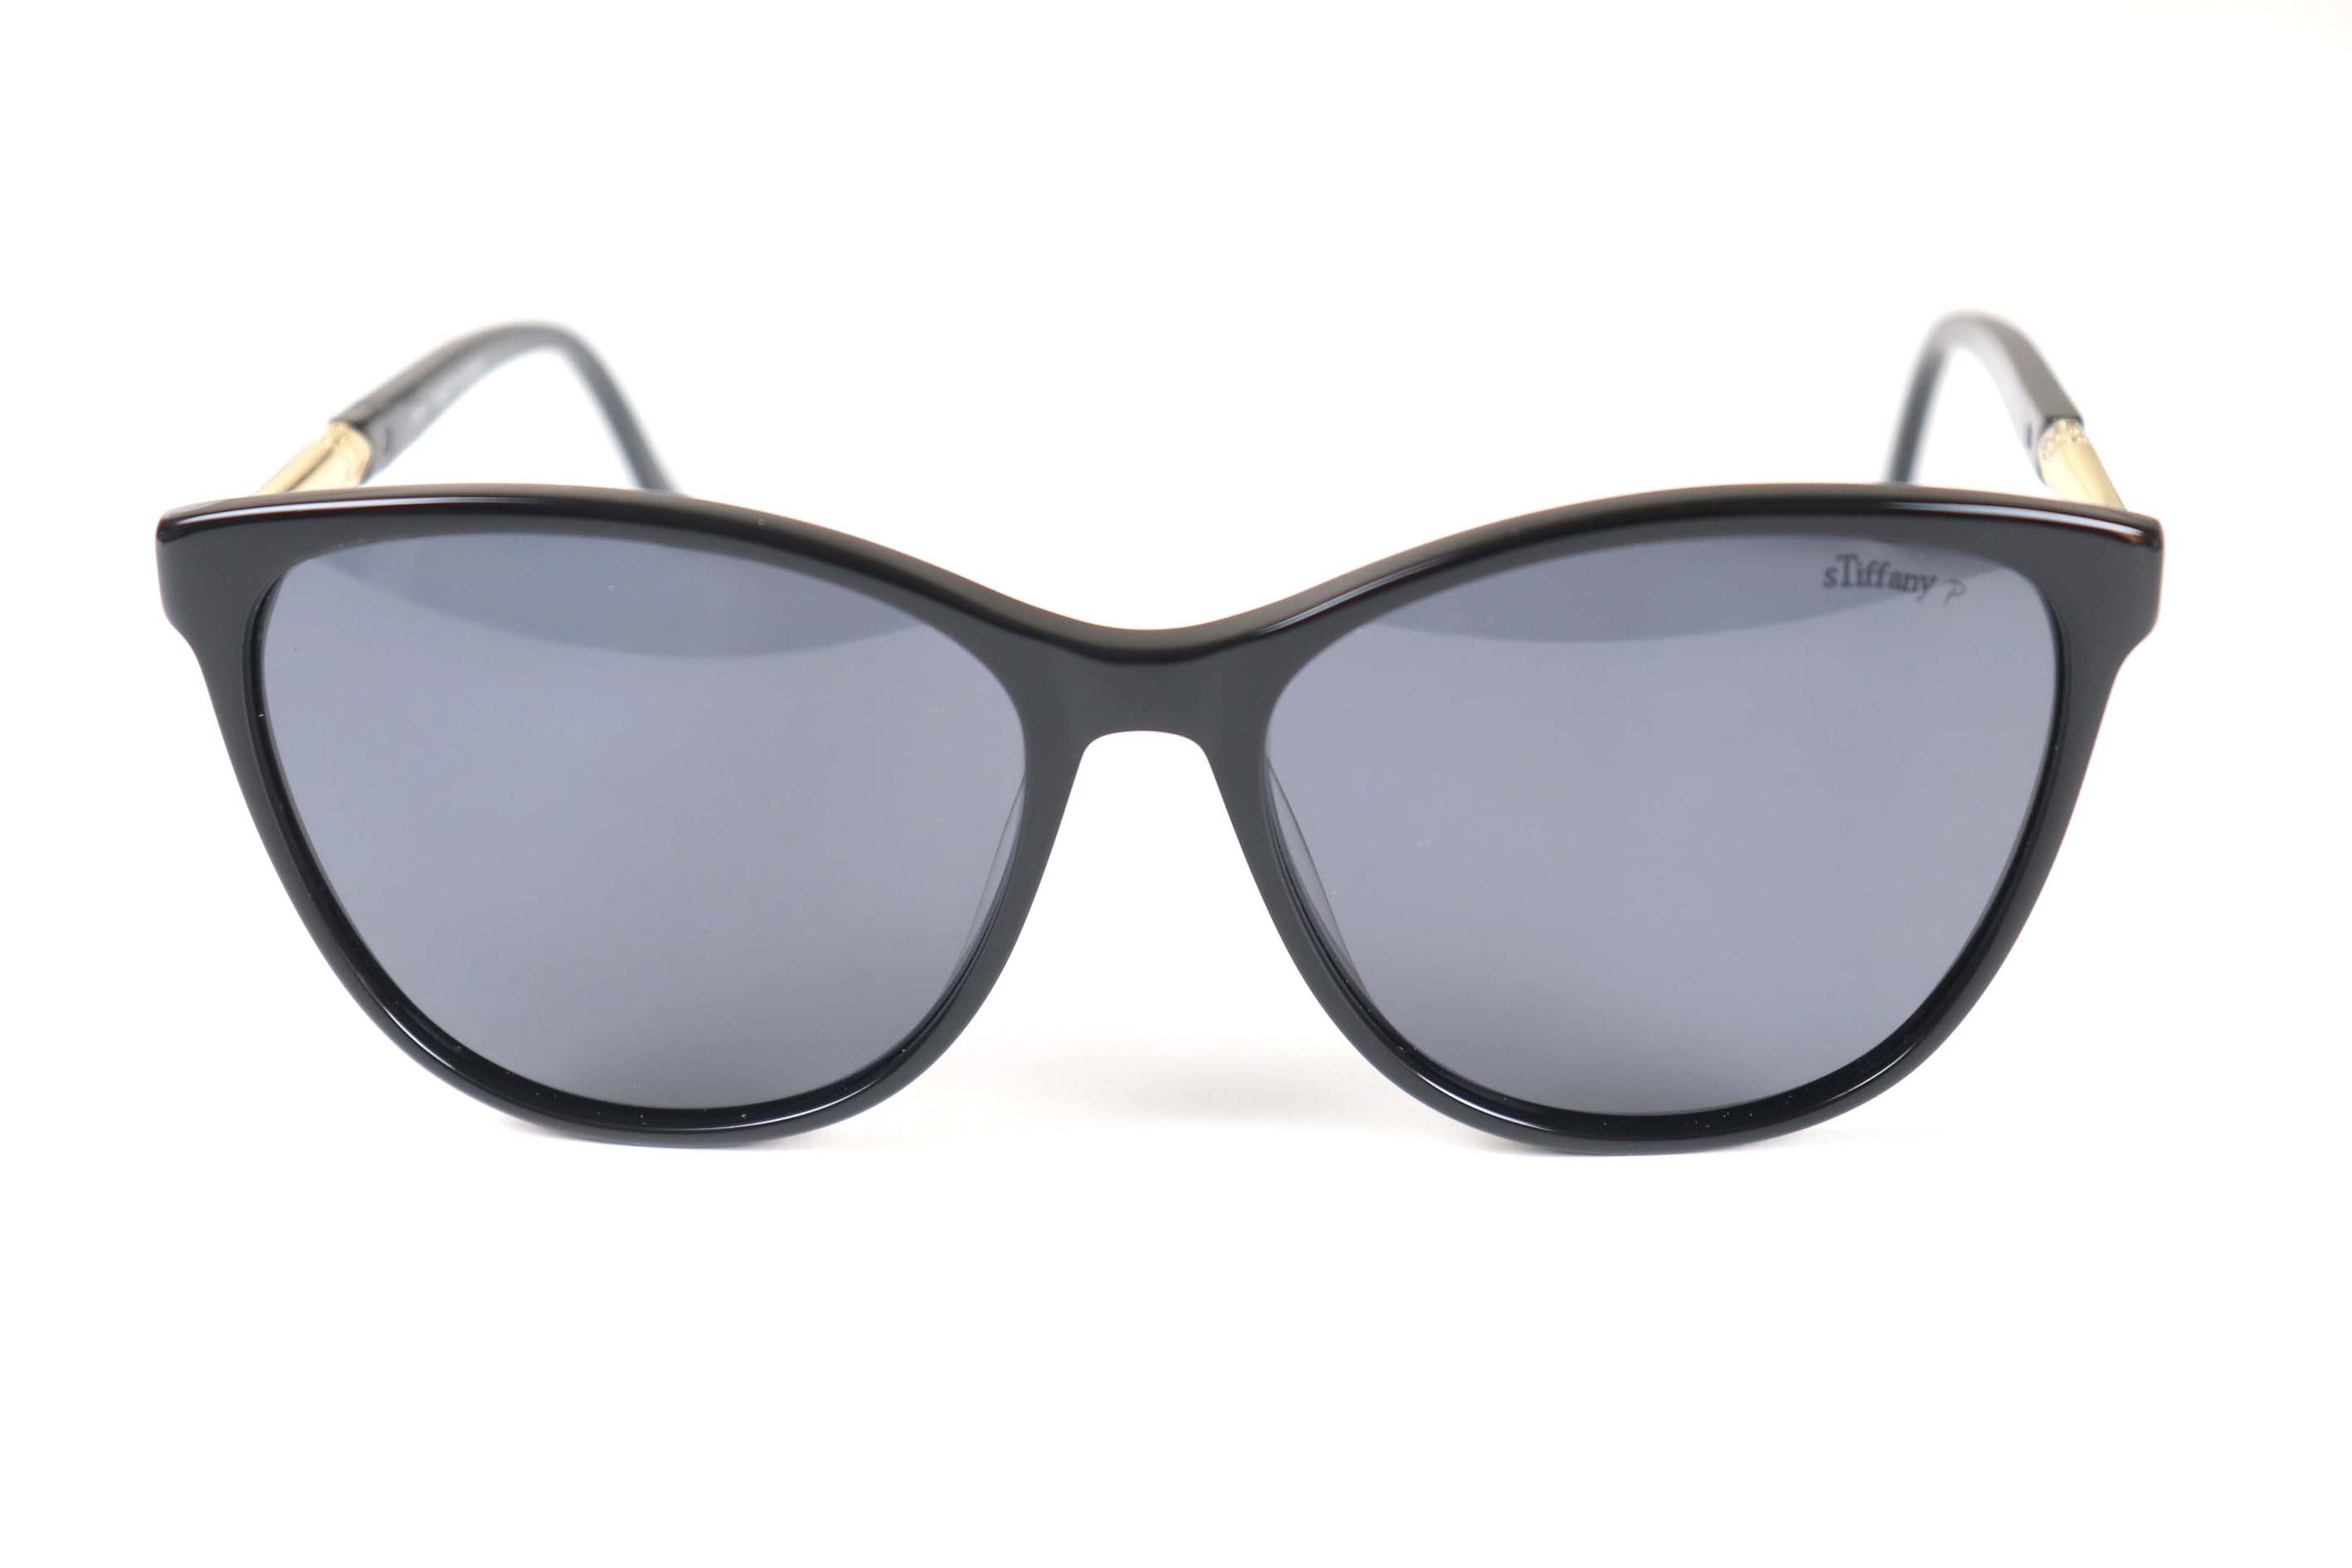 Stiffany Sunglasses-OR-OAK19090-C1-S